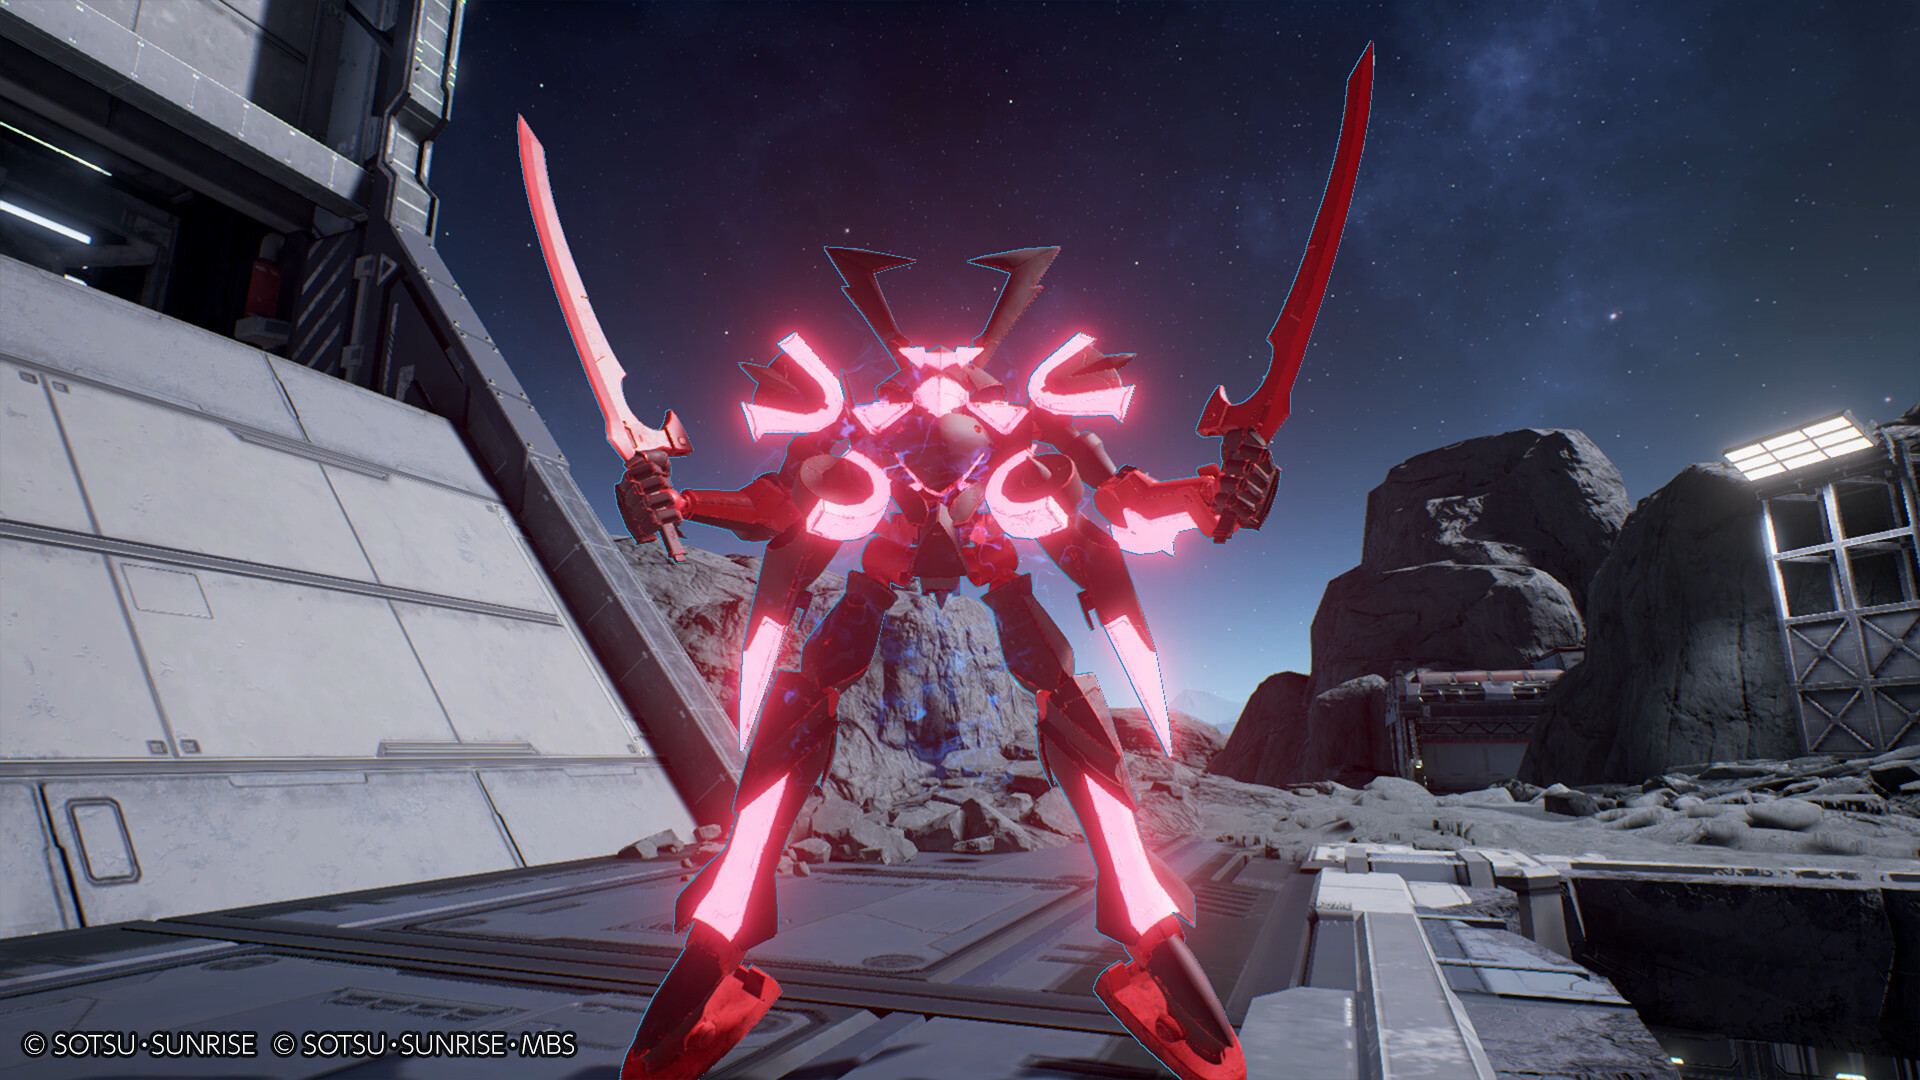 Gundam Evolution announced, a free-to-play team shooter